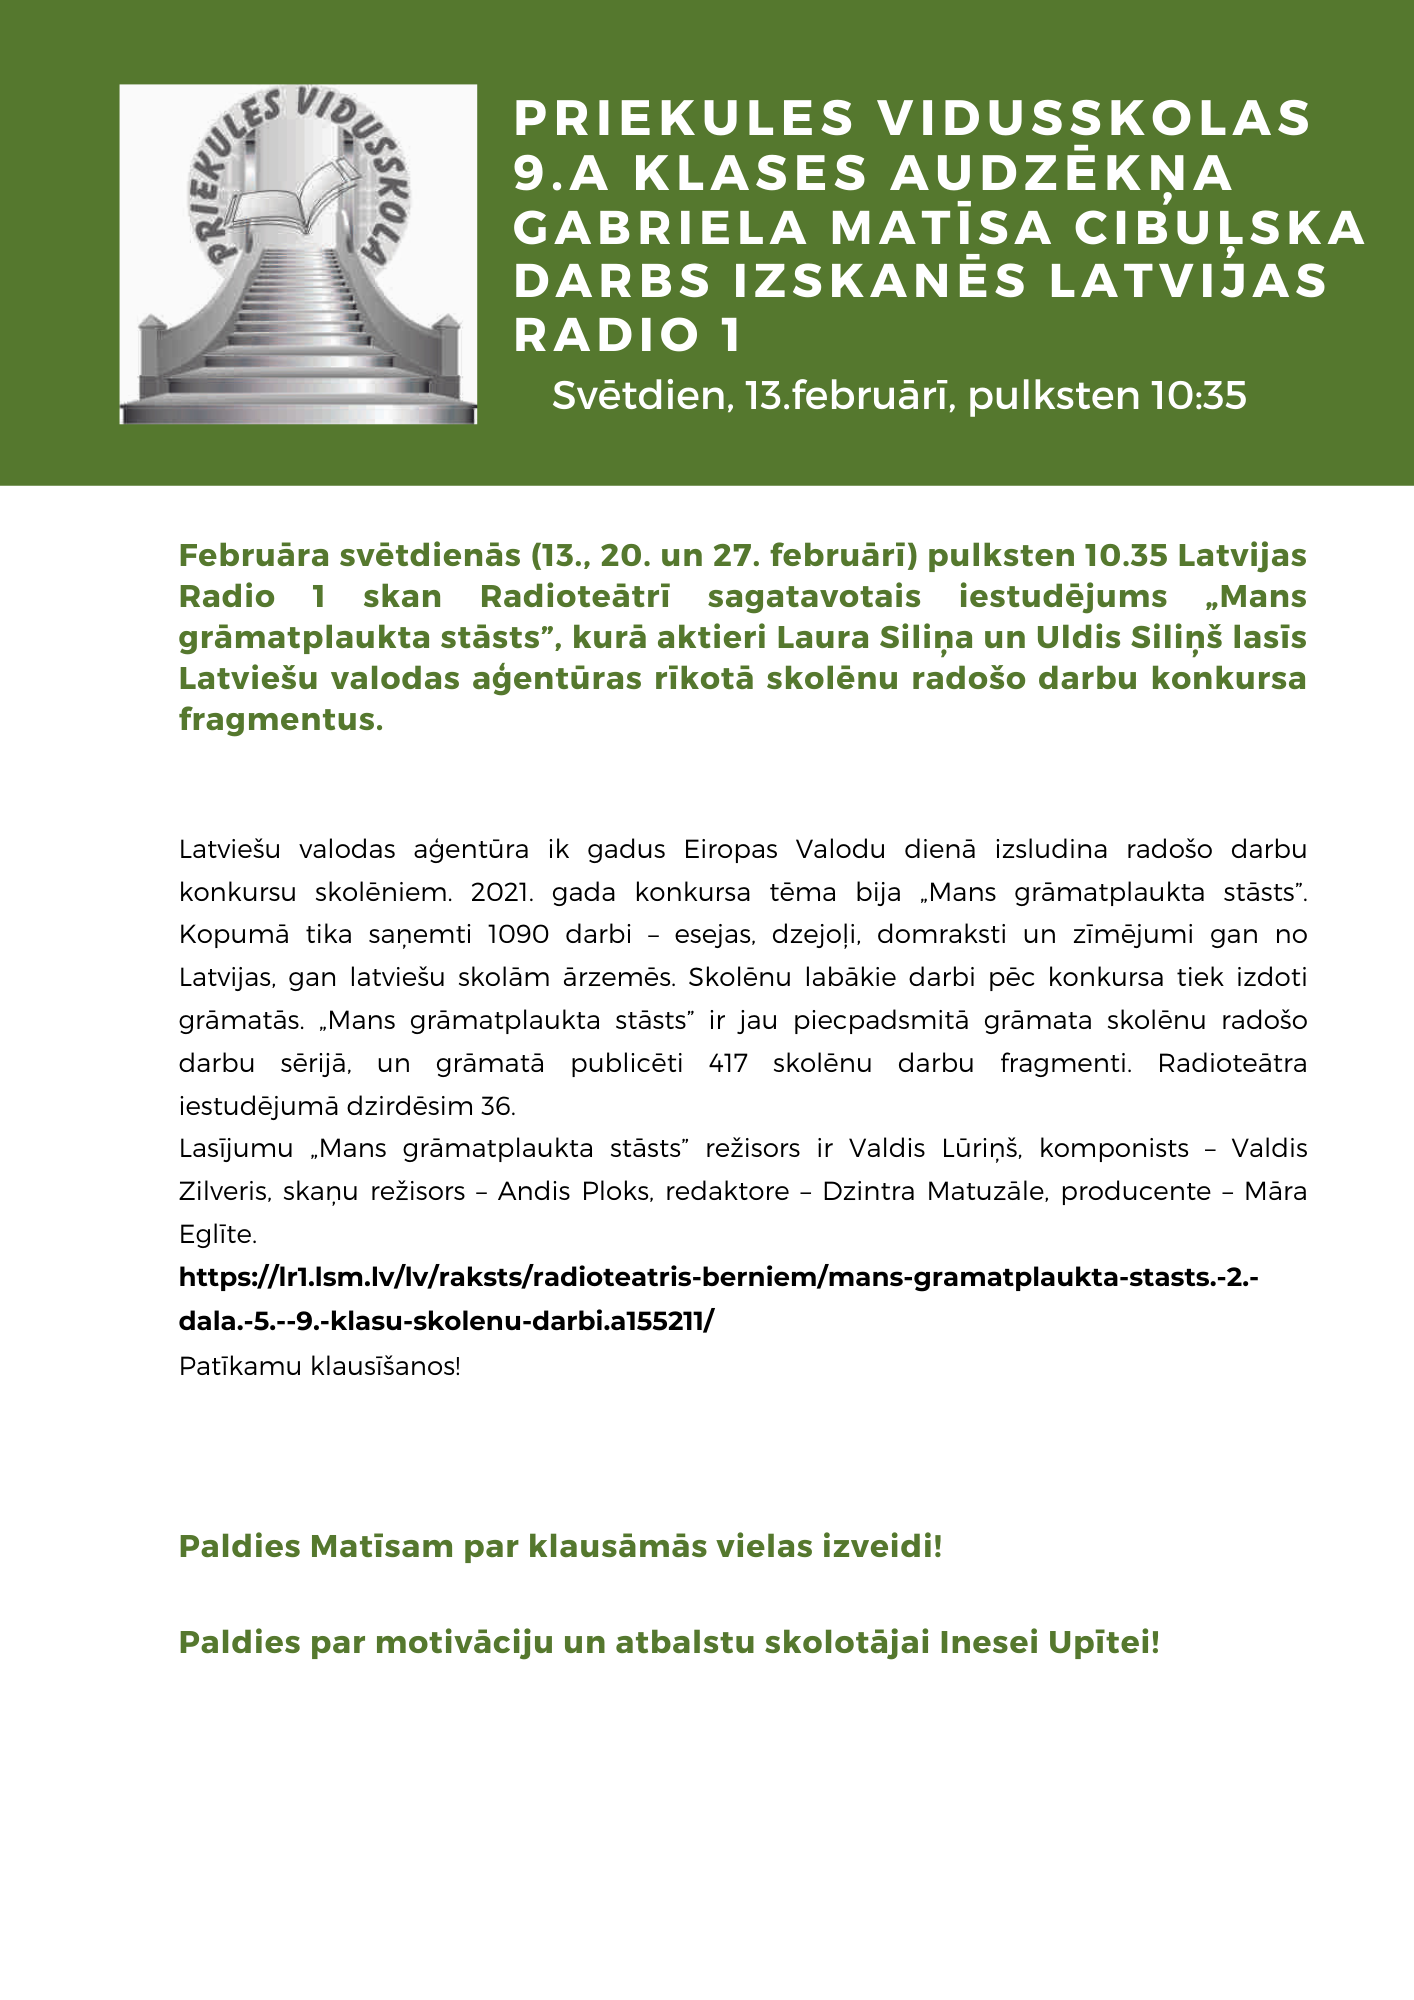 Matisa domraksts radio1 - kopija